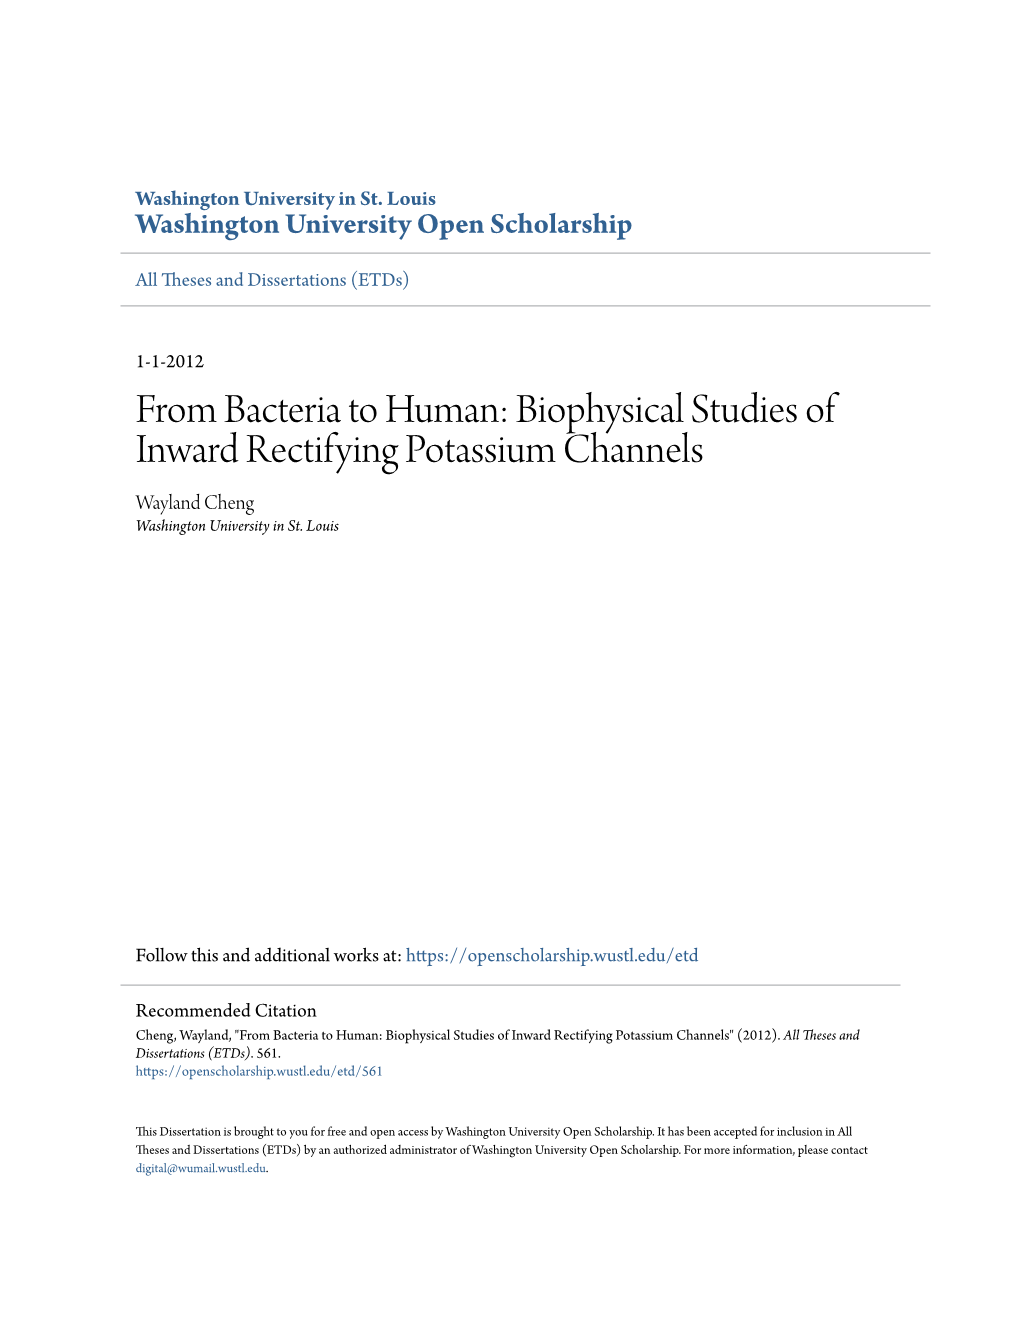 Biophysical Studies of Inward Rectifying Potassium Channels Wayland Cheng Washington University in St